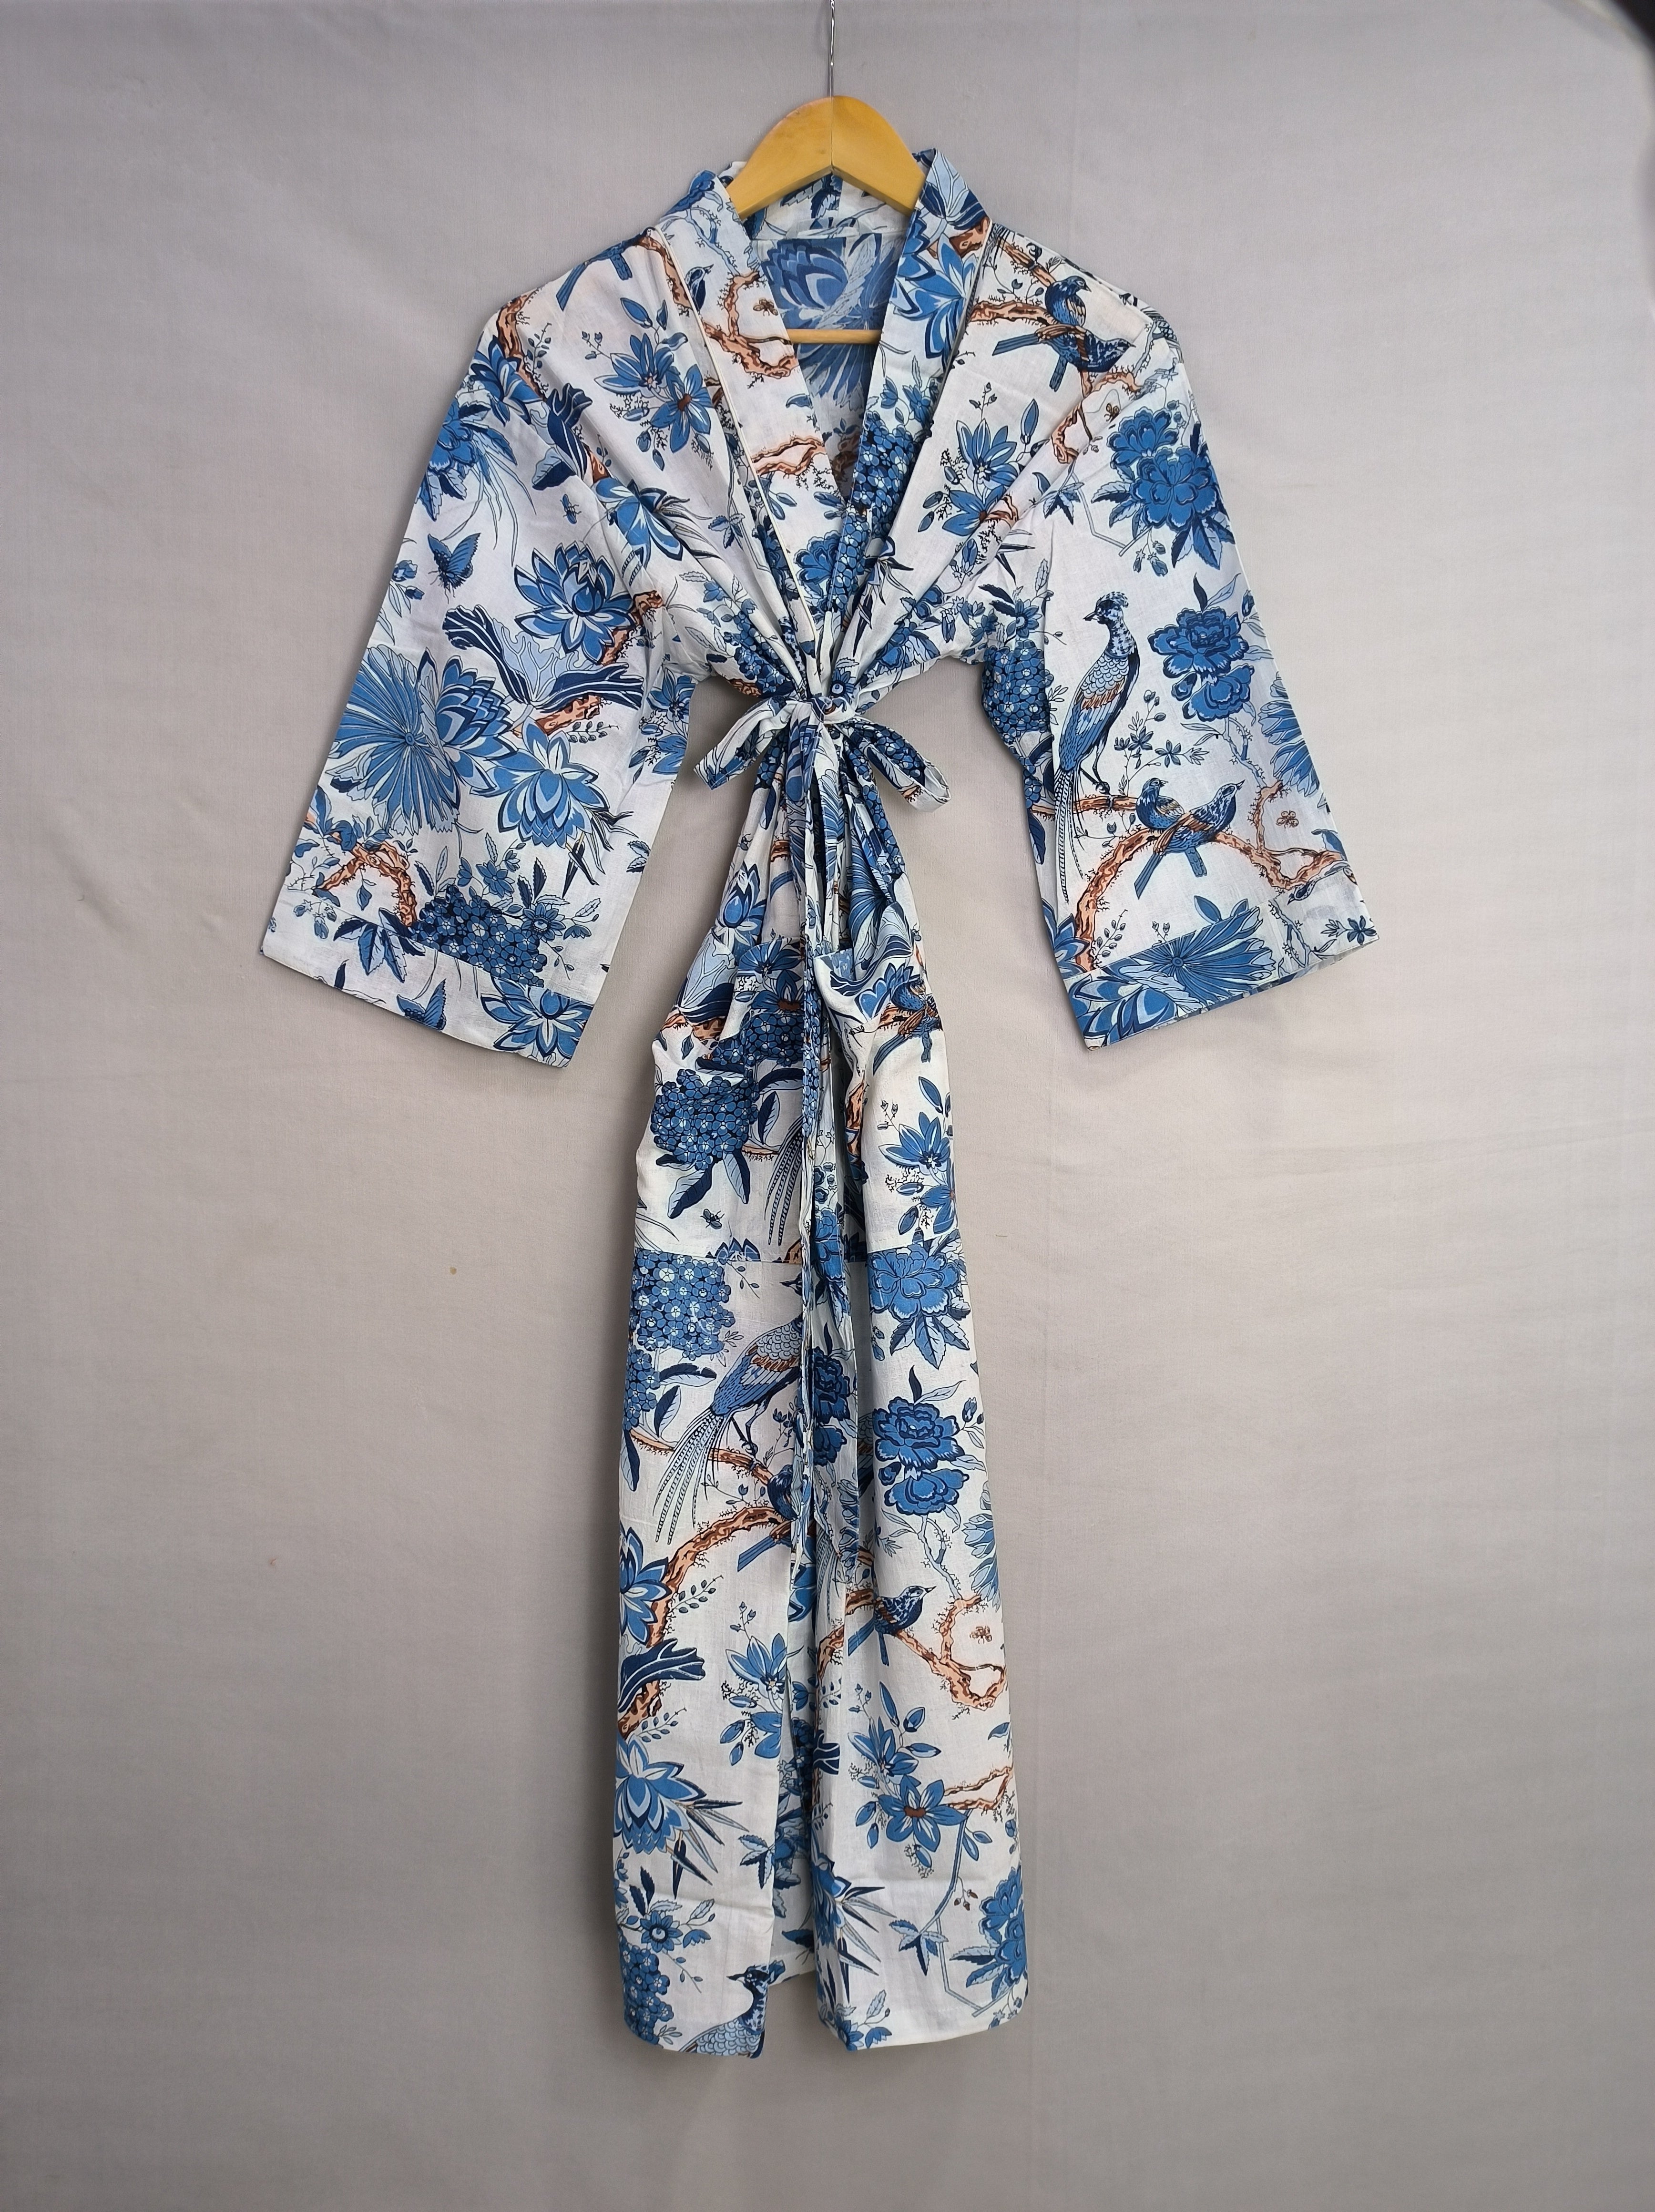 Pure Cotton Kimono Indian Handprinted Boho House Robe Summer Dress, Blue White Floral Beach Coverup Maternity Mom Bridal